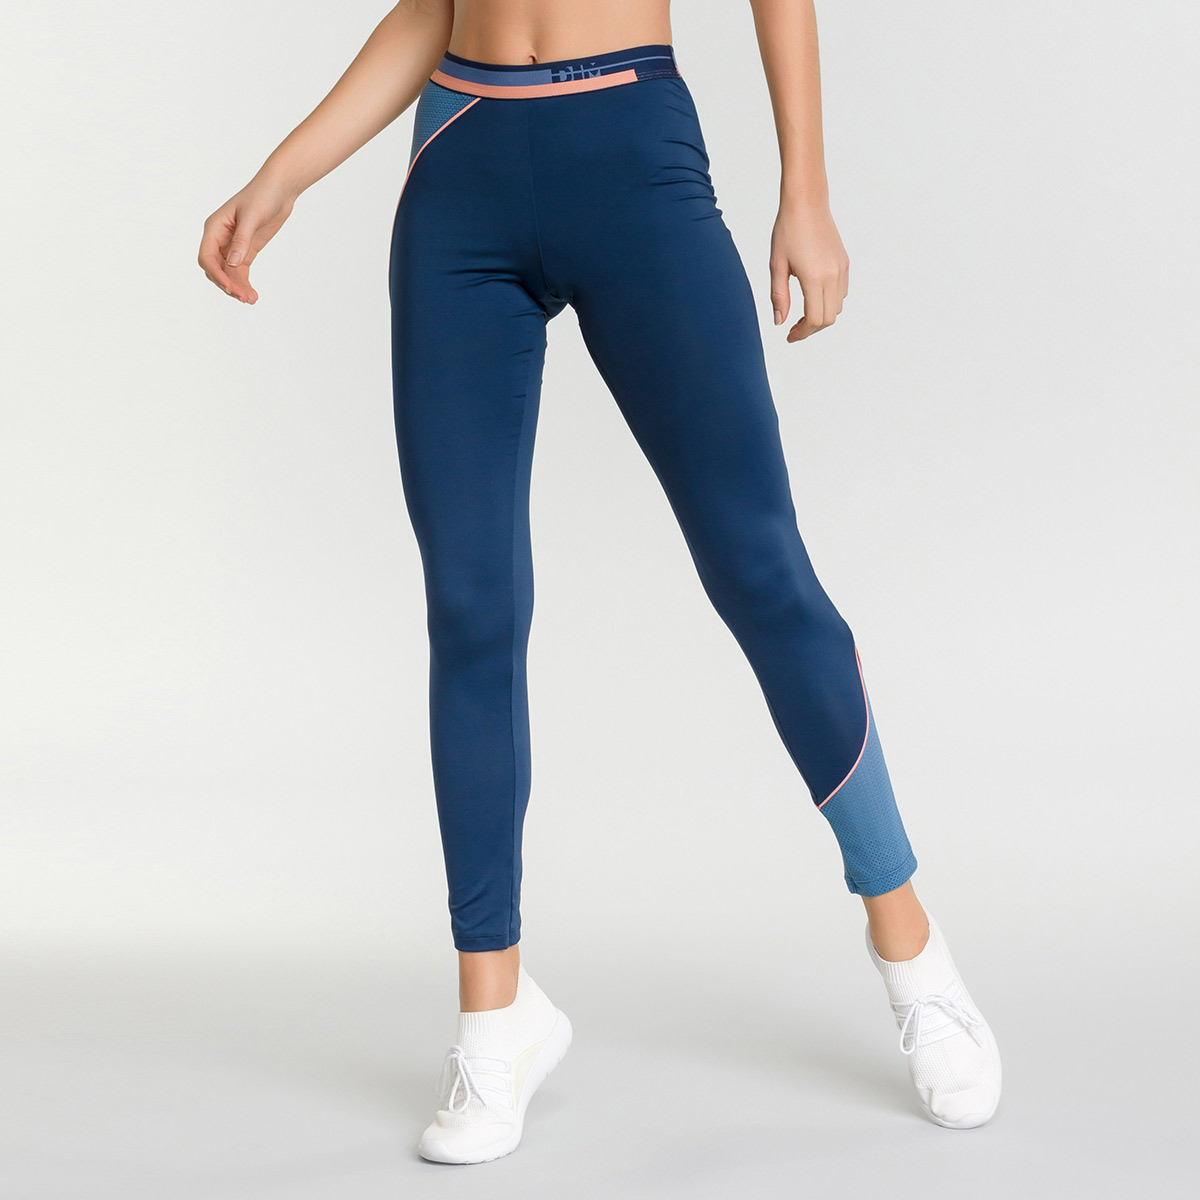 Caligrafía negro mucho Intense blue sport leggings for women - Dim Sport